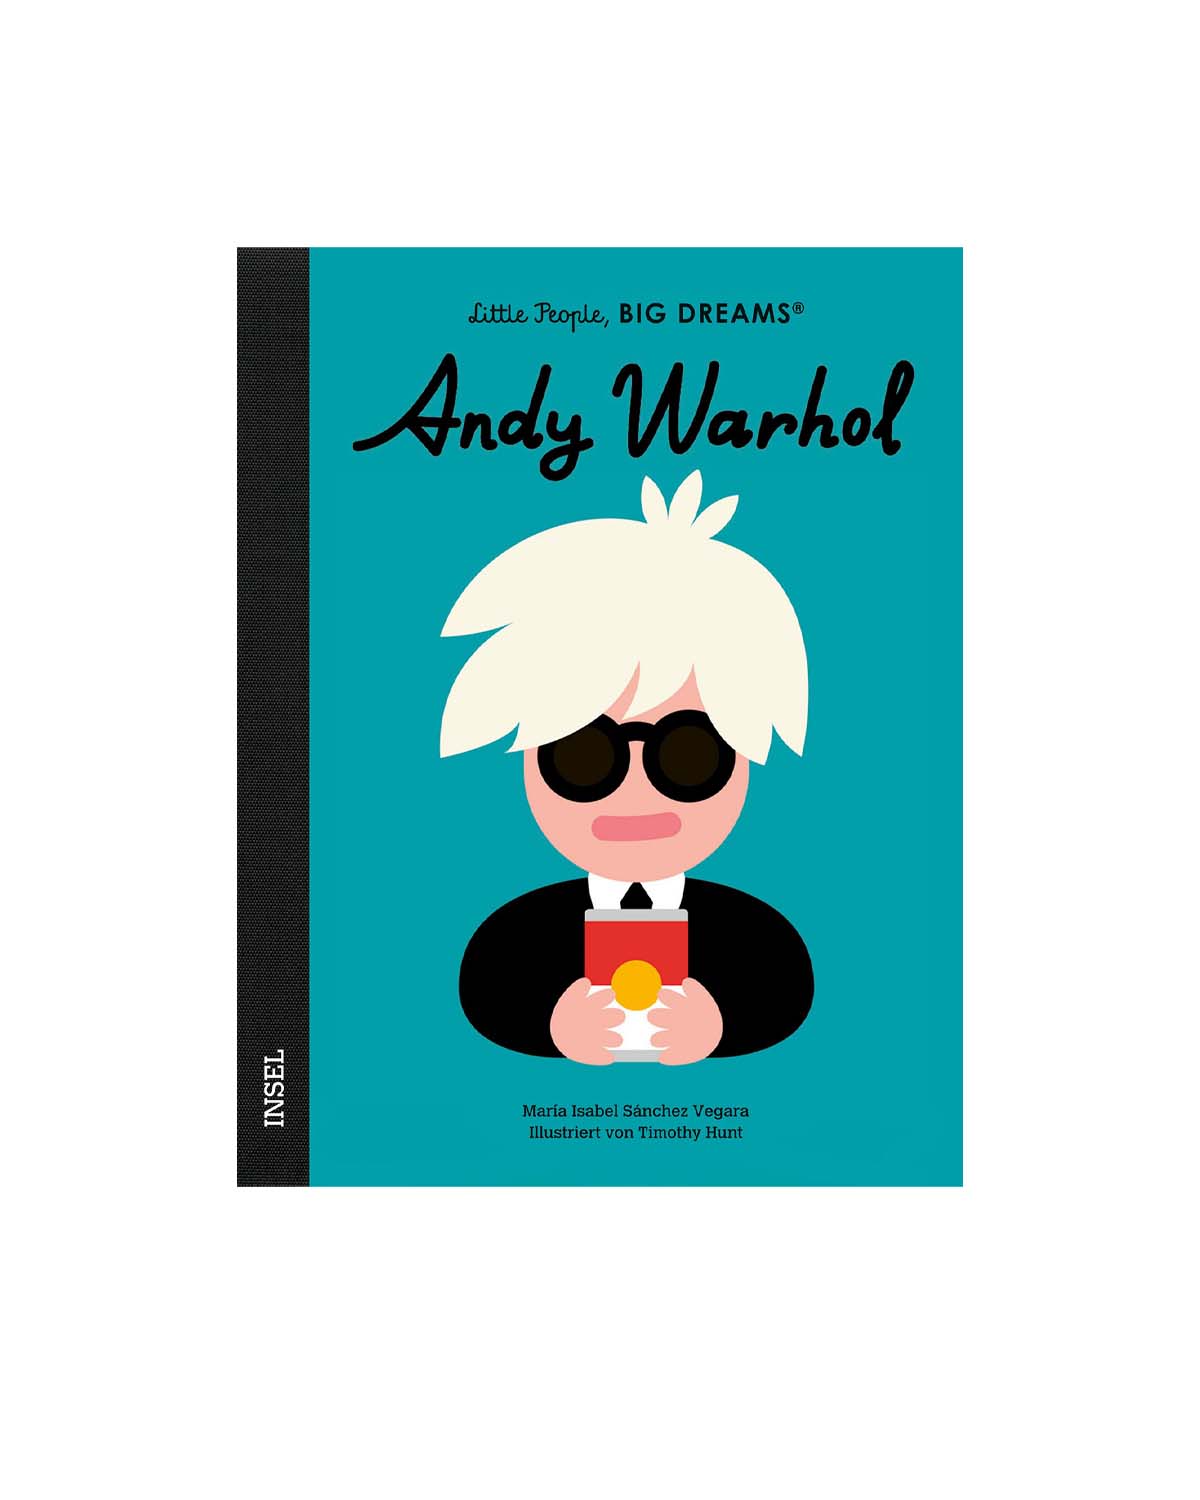 Little People Big Dreams - Andy Warhol